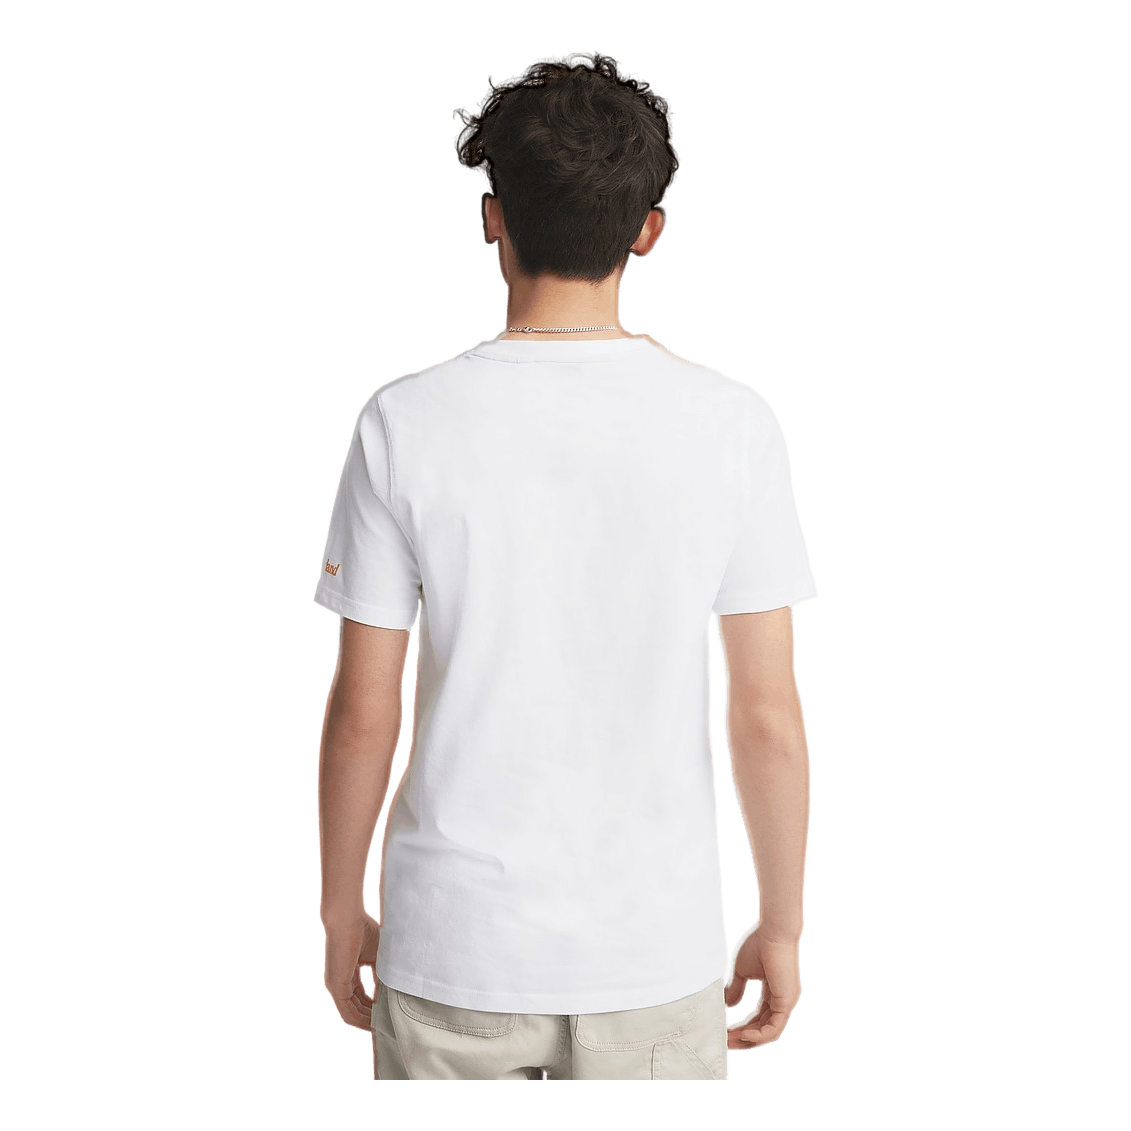 Short Sleeves Tee-shirt 10b White